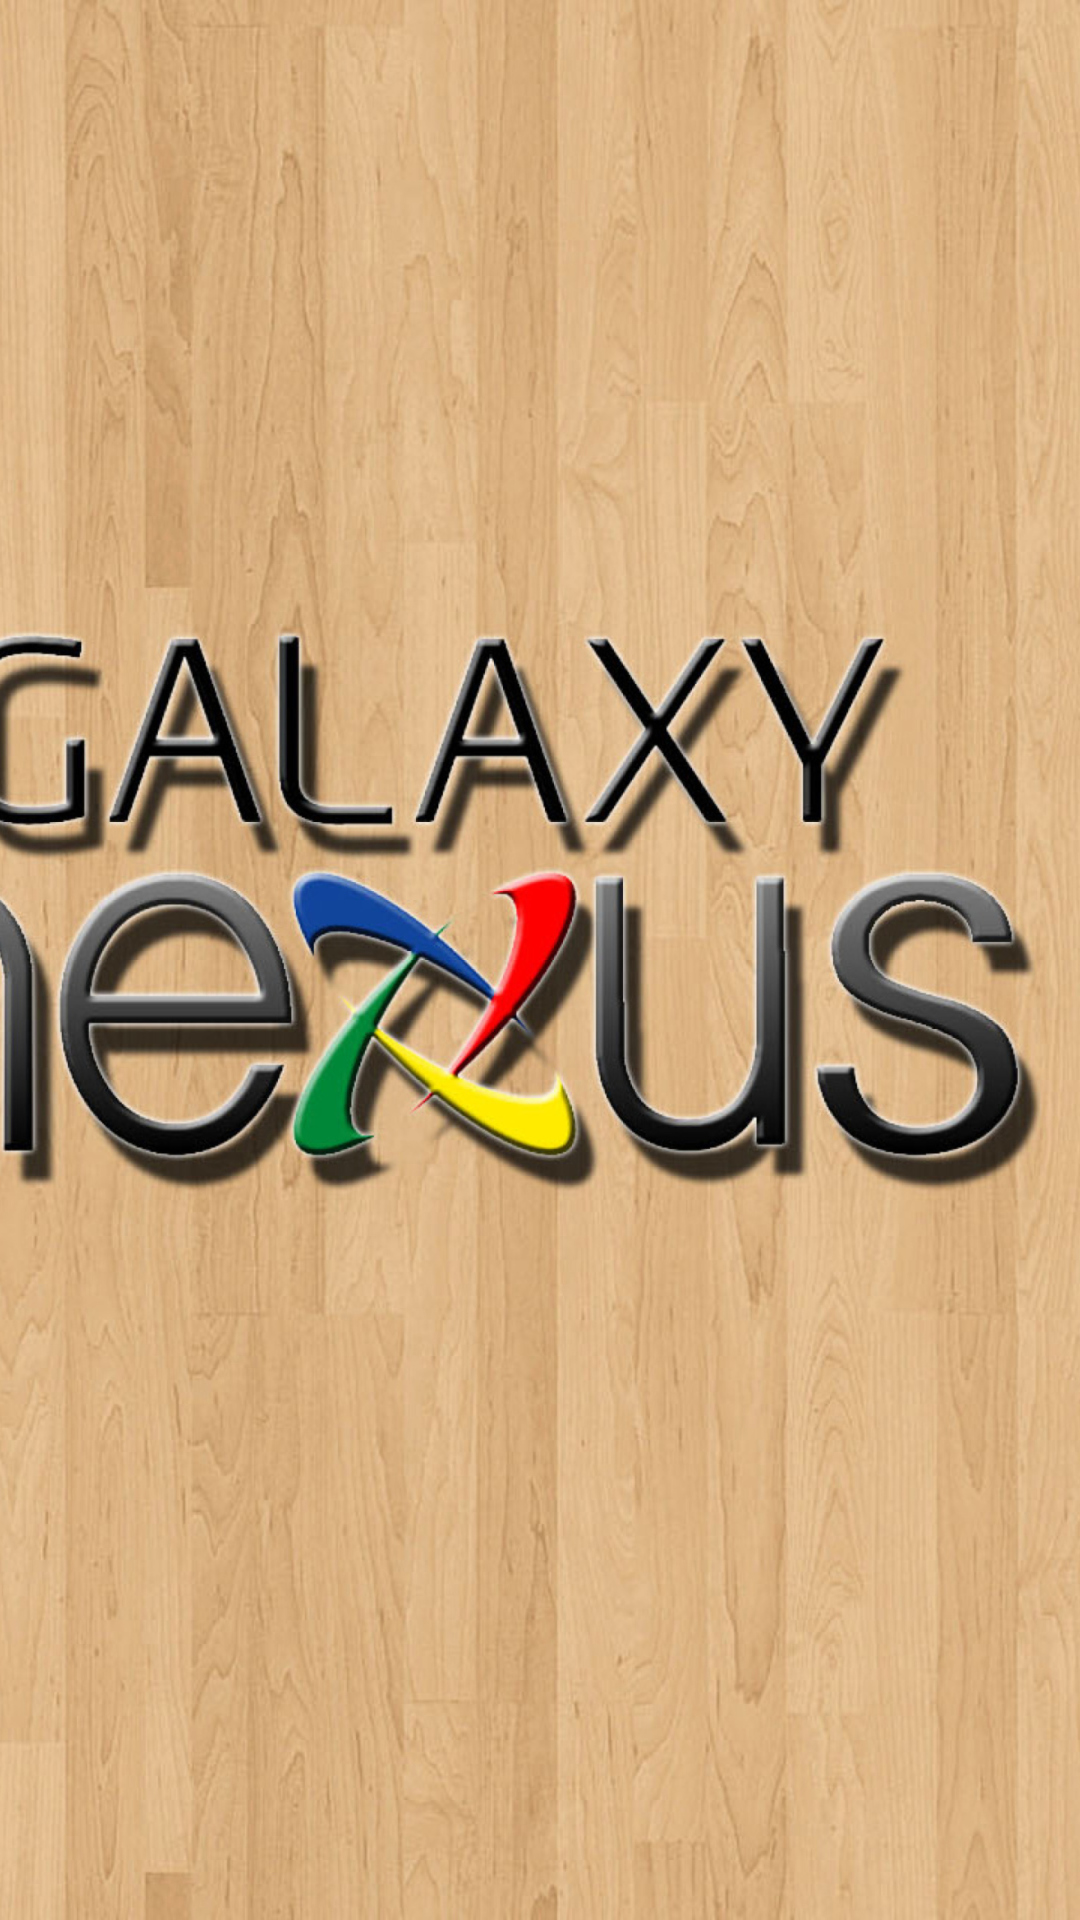 Galaxy Nexus wallpaper 1080x1920